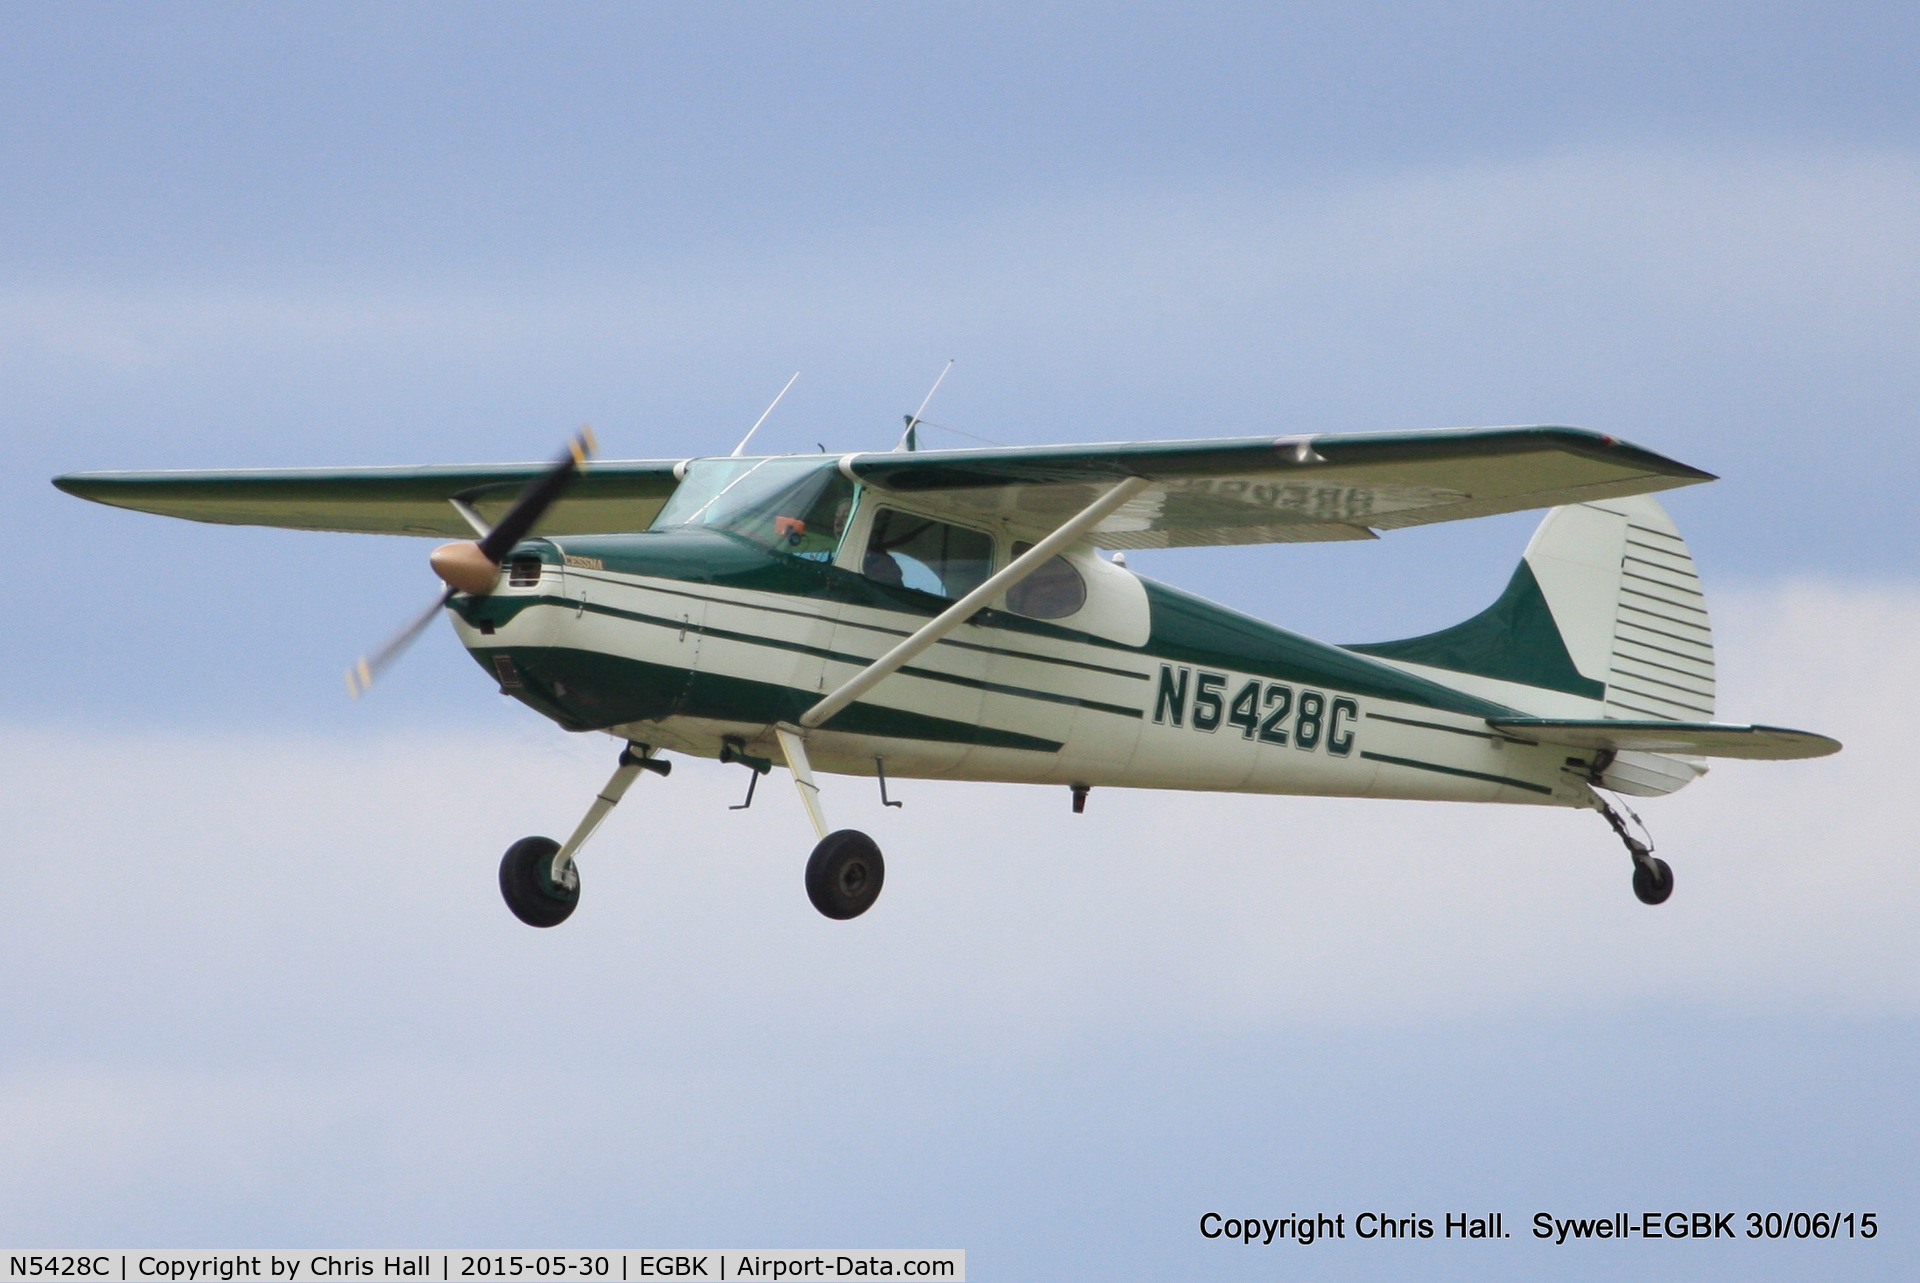 N5428C, 1950 Cessna 170 C/N 19462, at Aeroexpo 2015